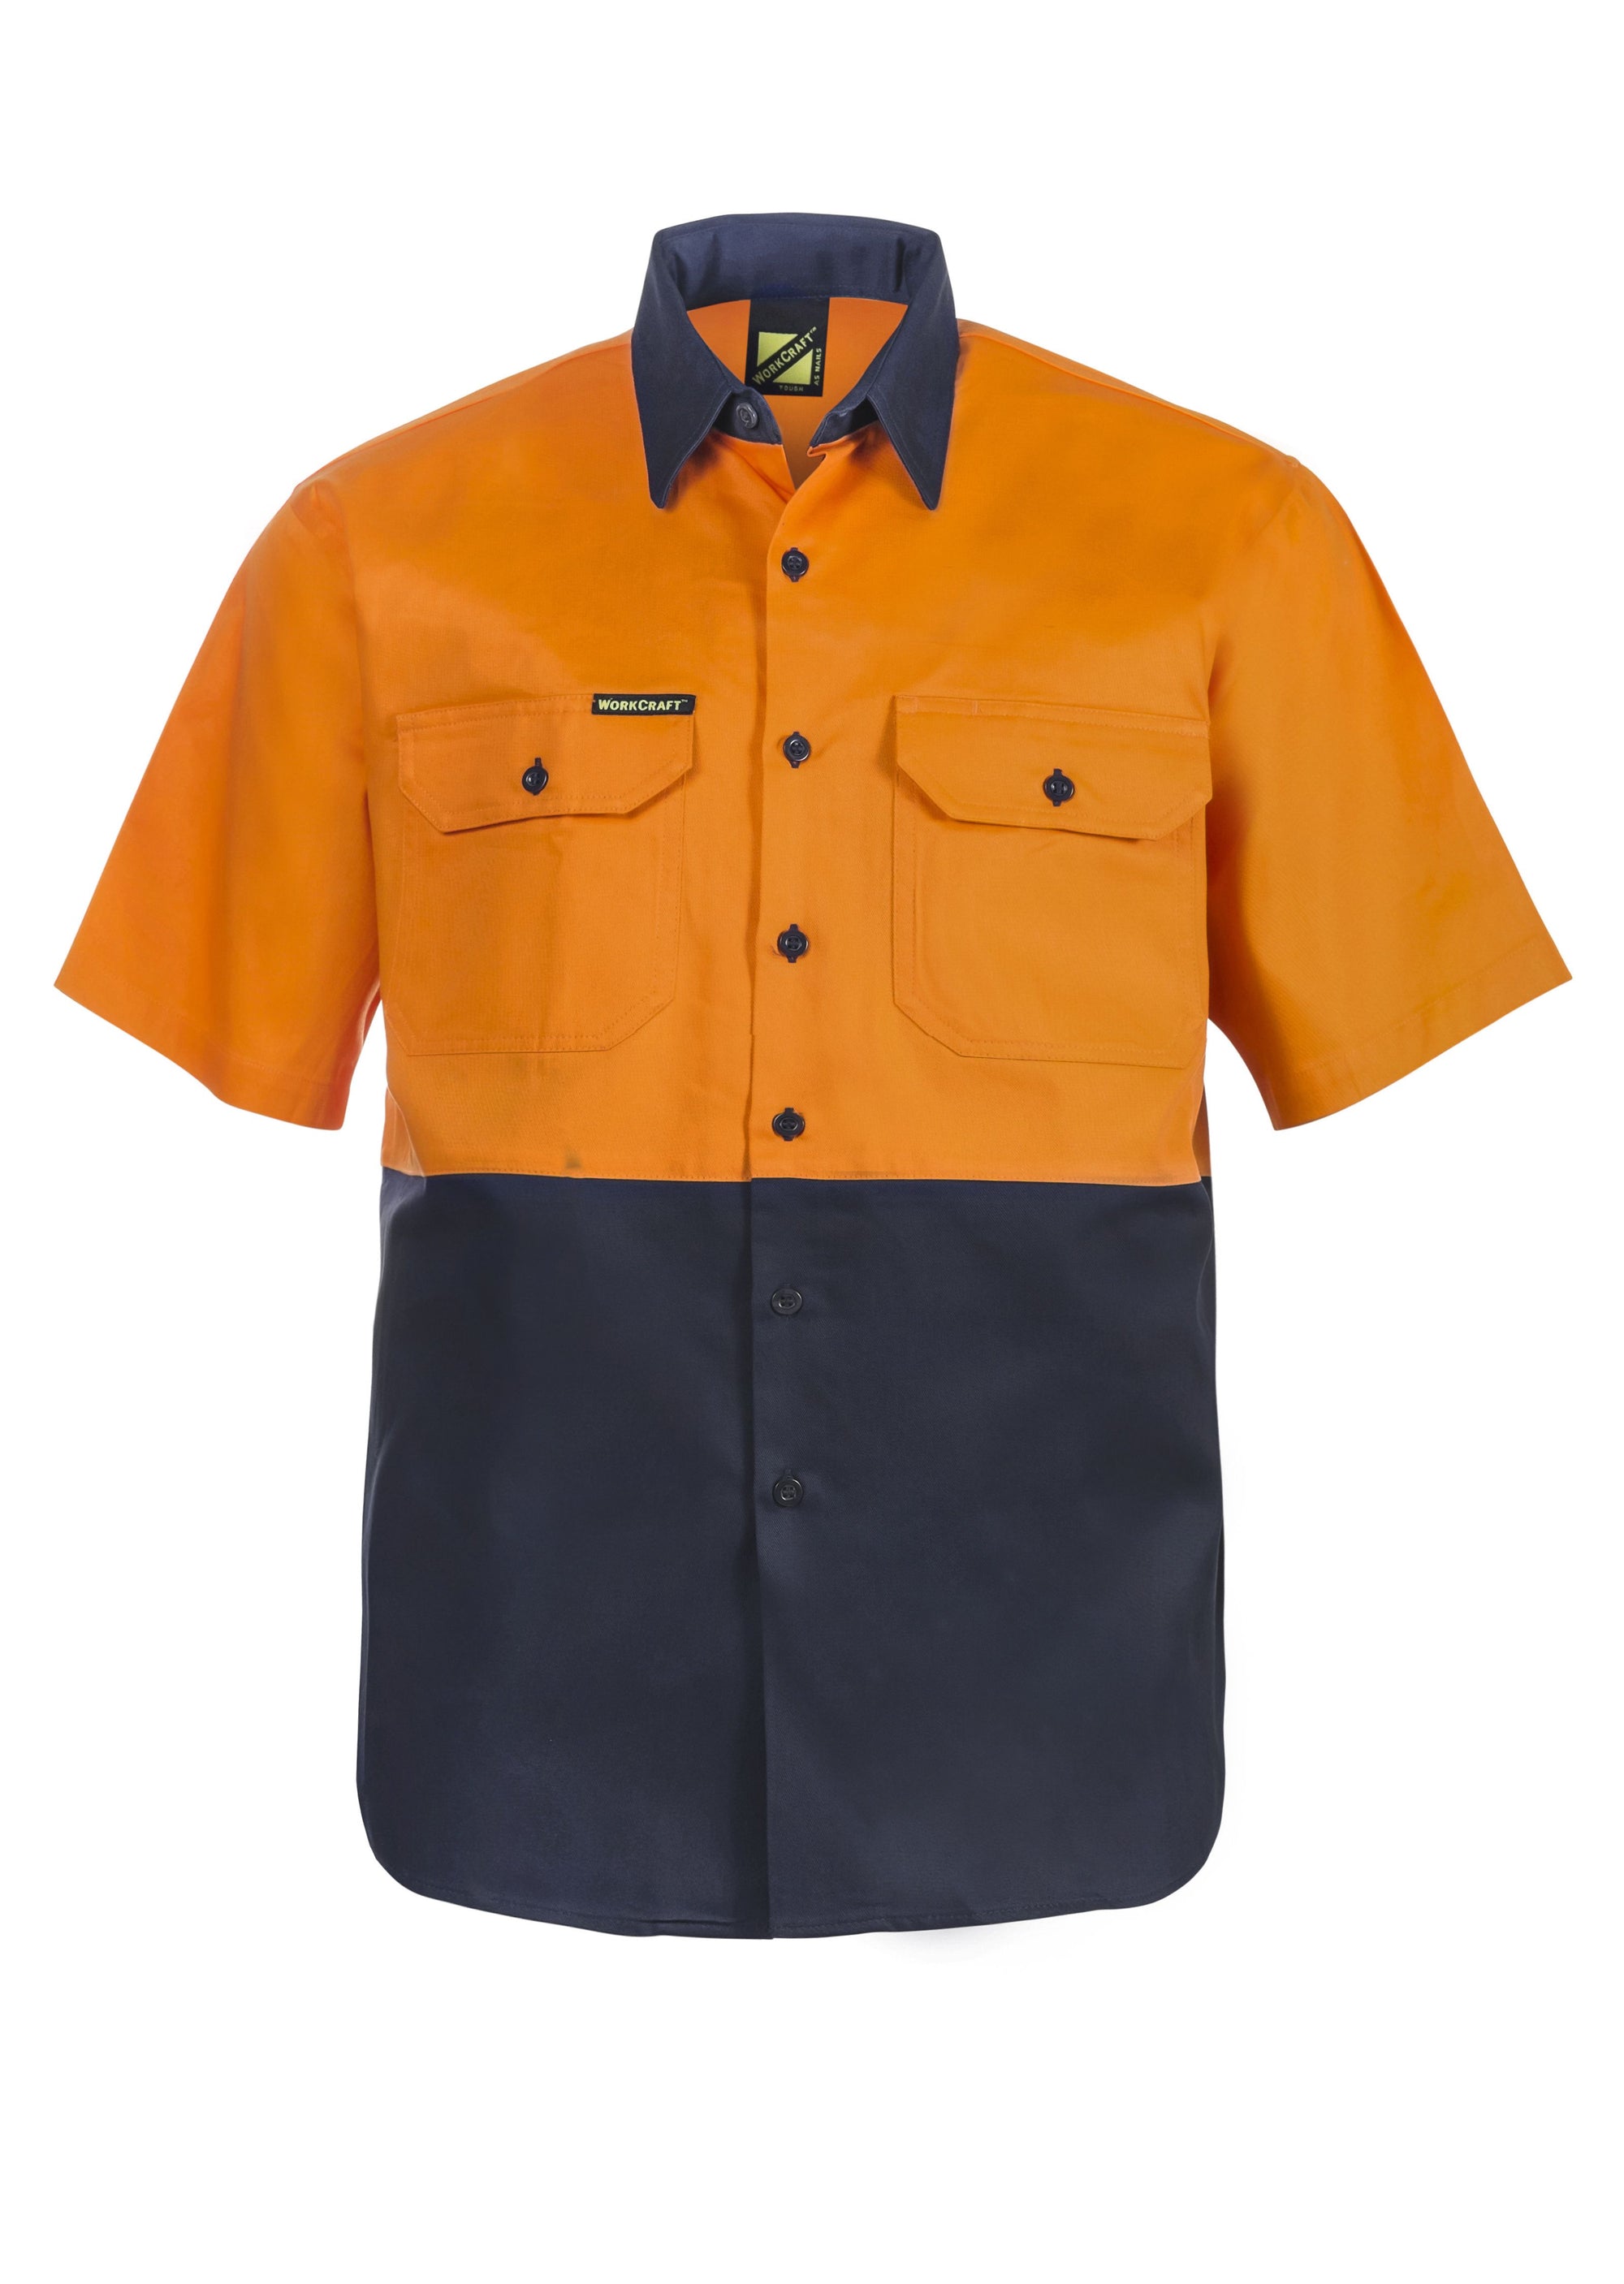 WorkCraft Mens Orange/Navy Drill Shirt ss 190g L